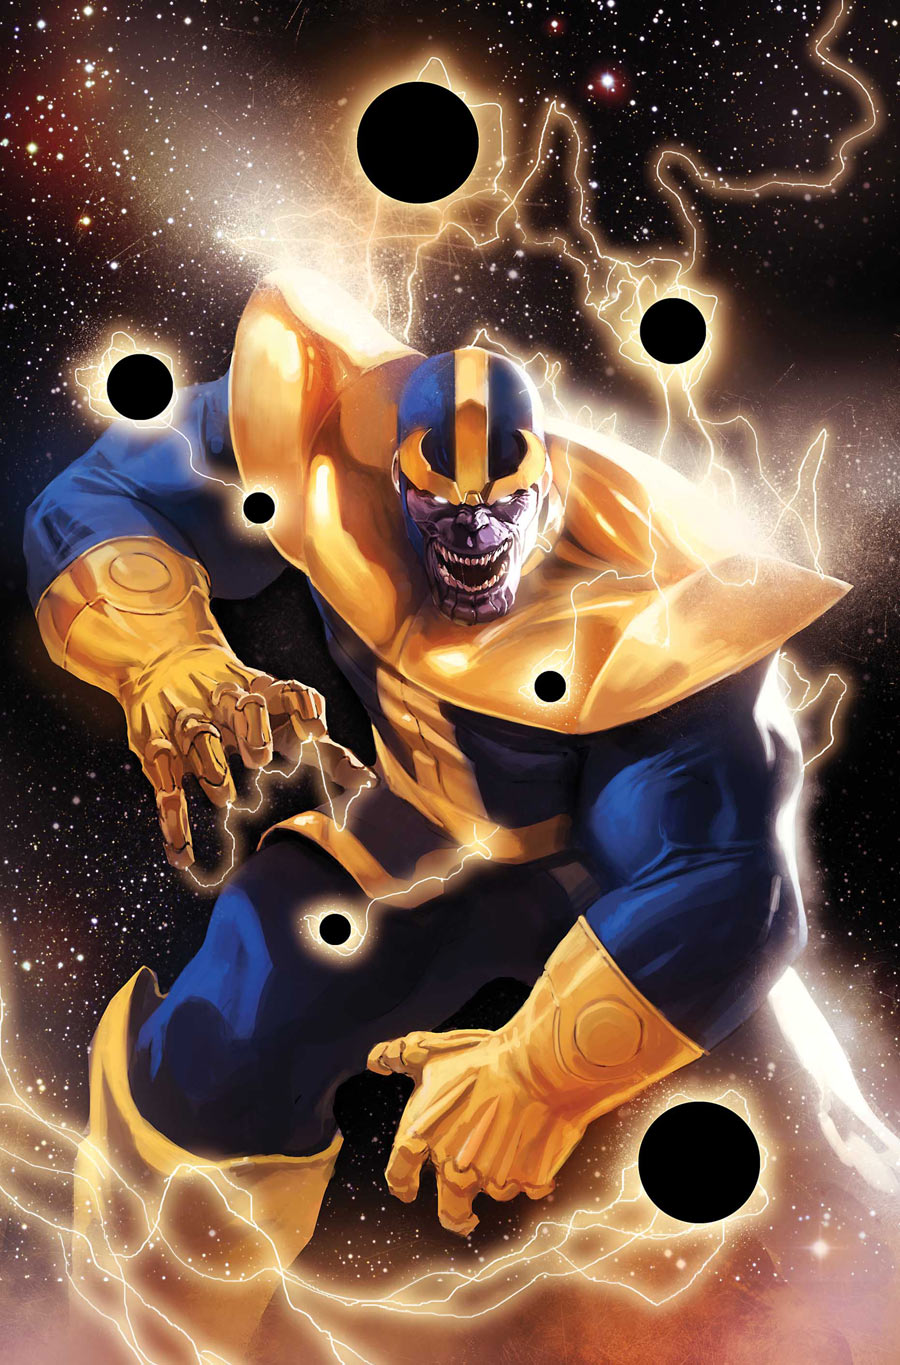 Thanos rising vol 1 1 djurdjevic variant textless